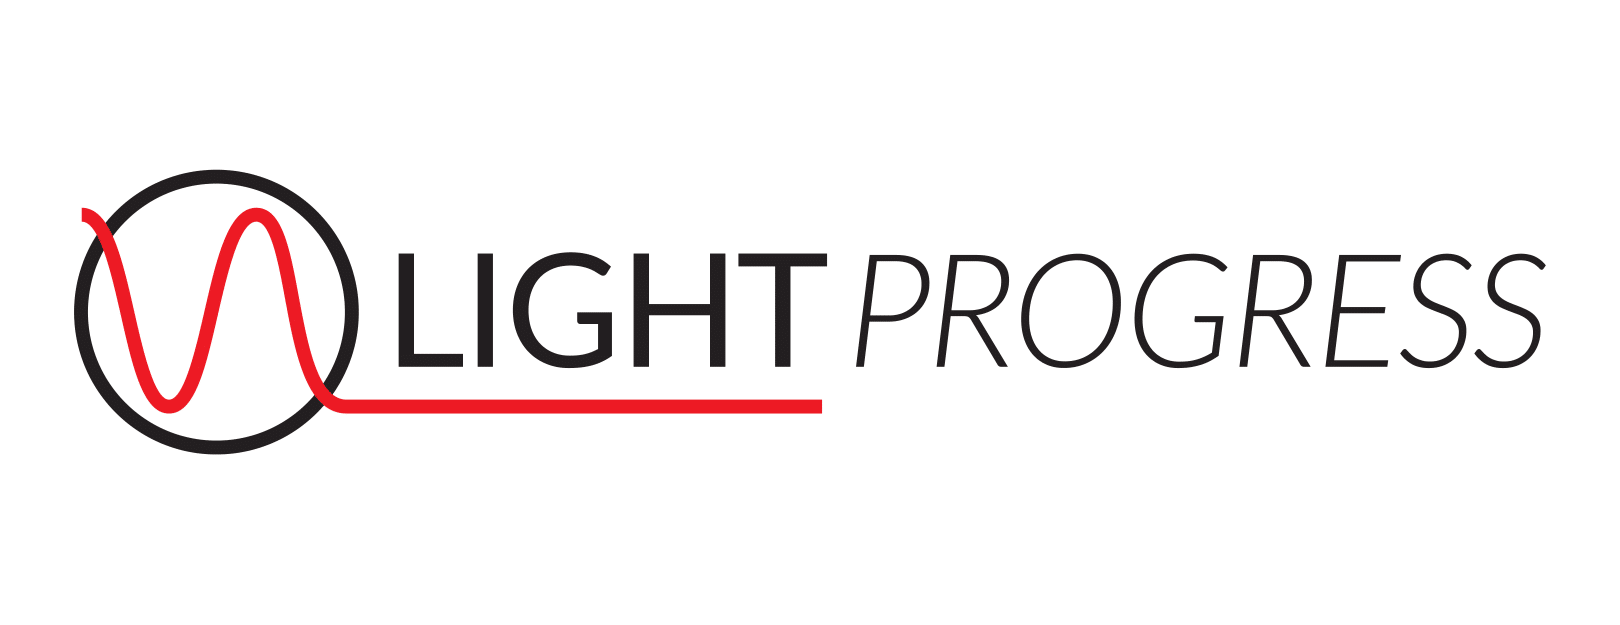 Light Progress deals with producing equipment uv-c germicides